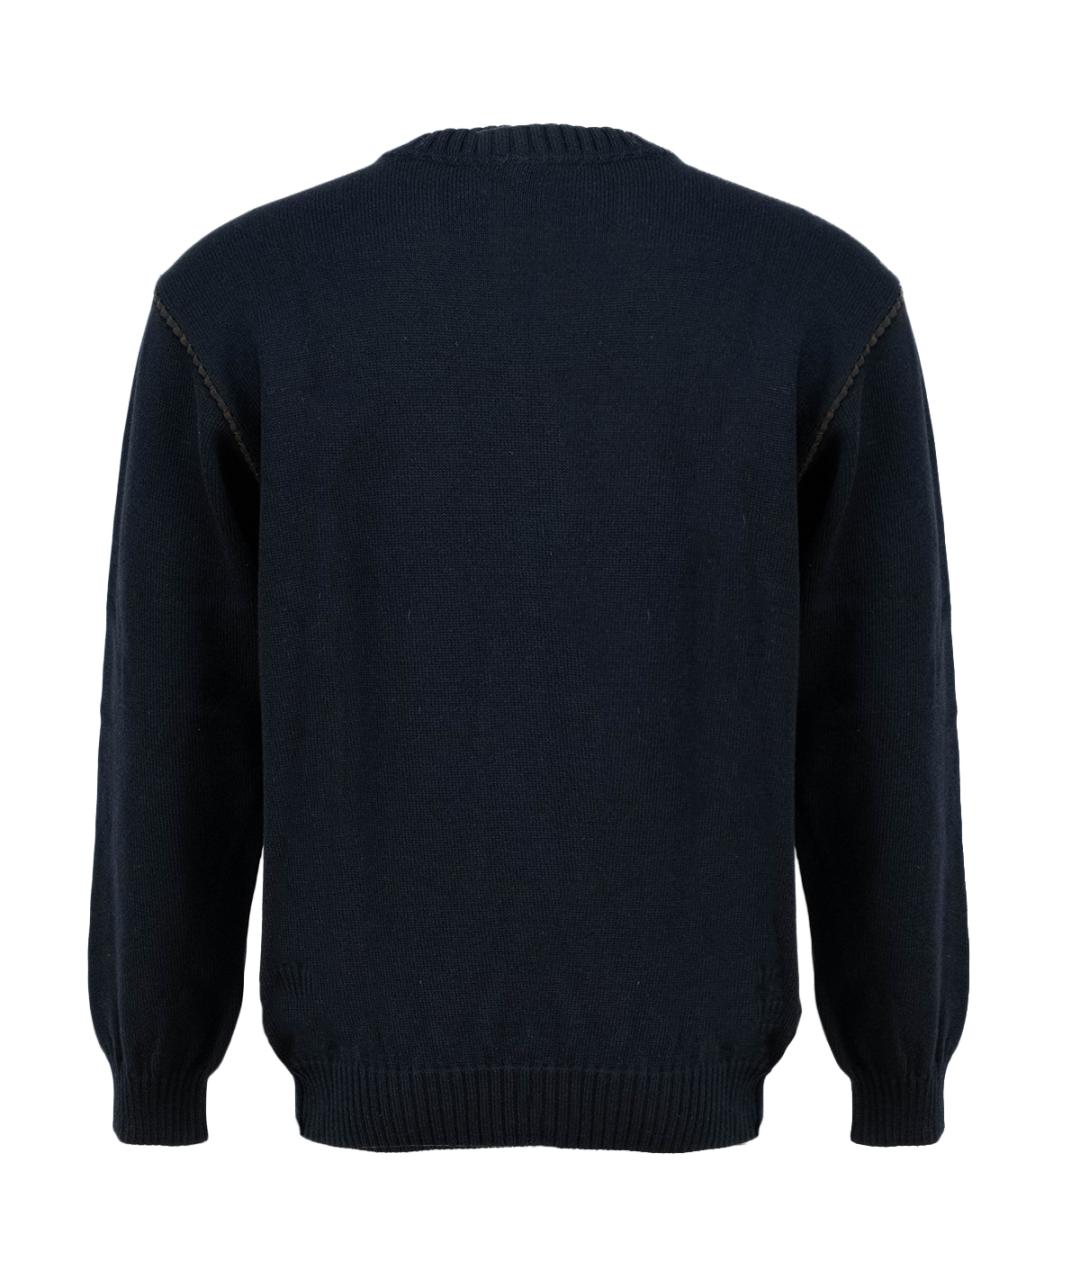 PAUL & SHARK Темно-синий шерстяной джемпер / свитер, фото 2